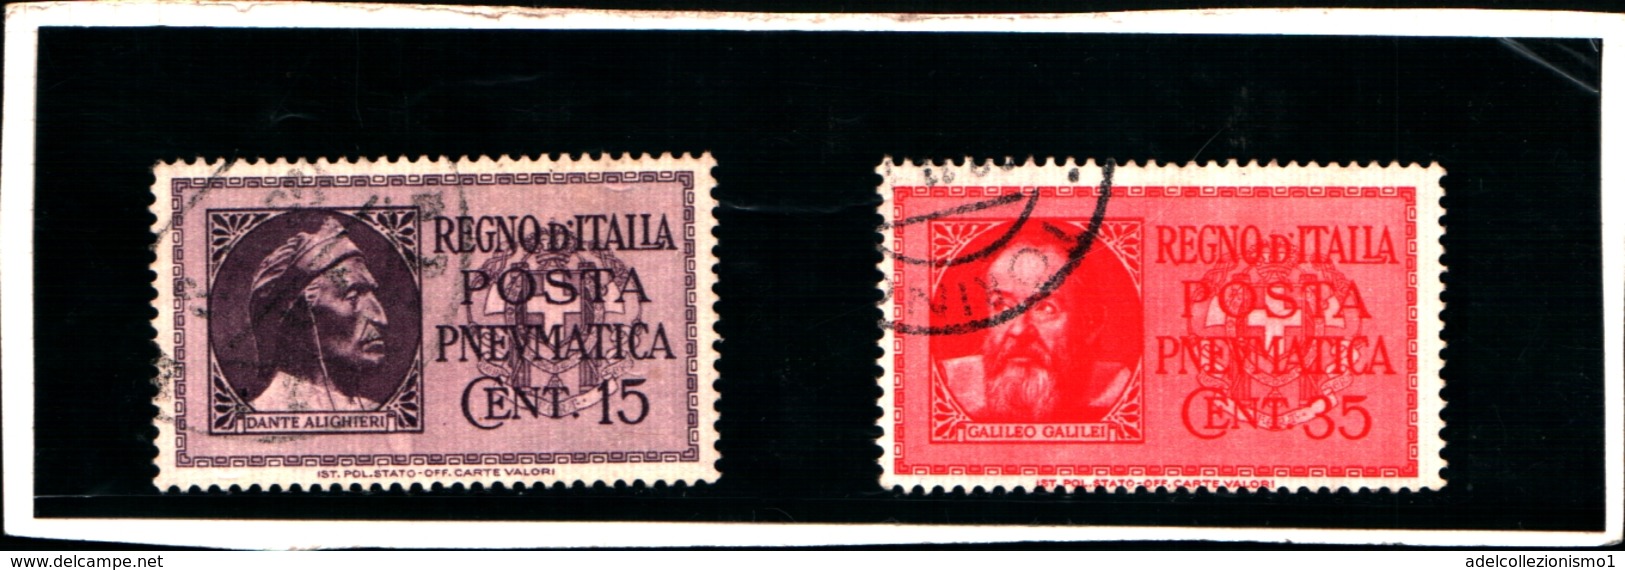 91063) ITALIA-Effigie Di Dante Alighieri E Galileo Galilei - POSTA PNEUMATICA - 29 Marzo 1933-USATI - Pneumatische Post